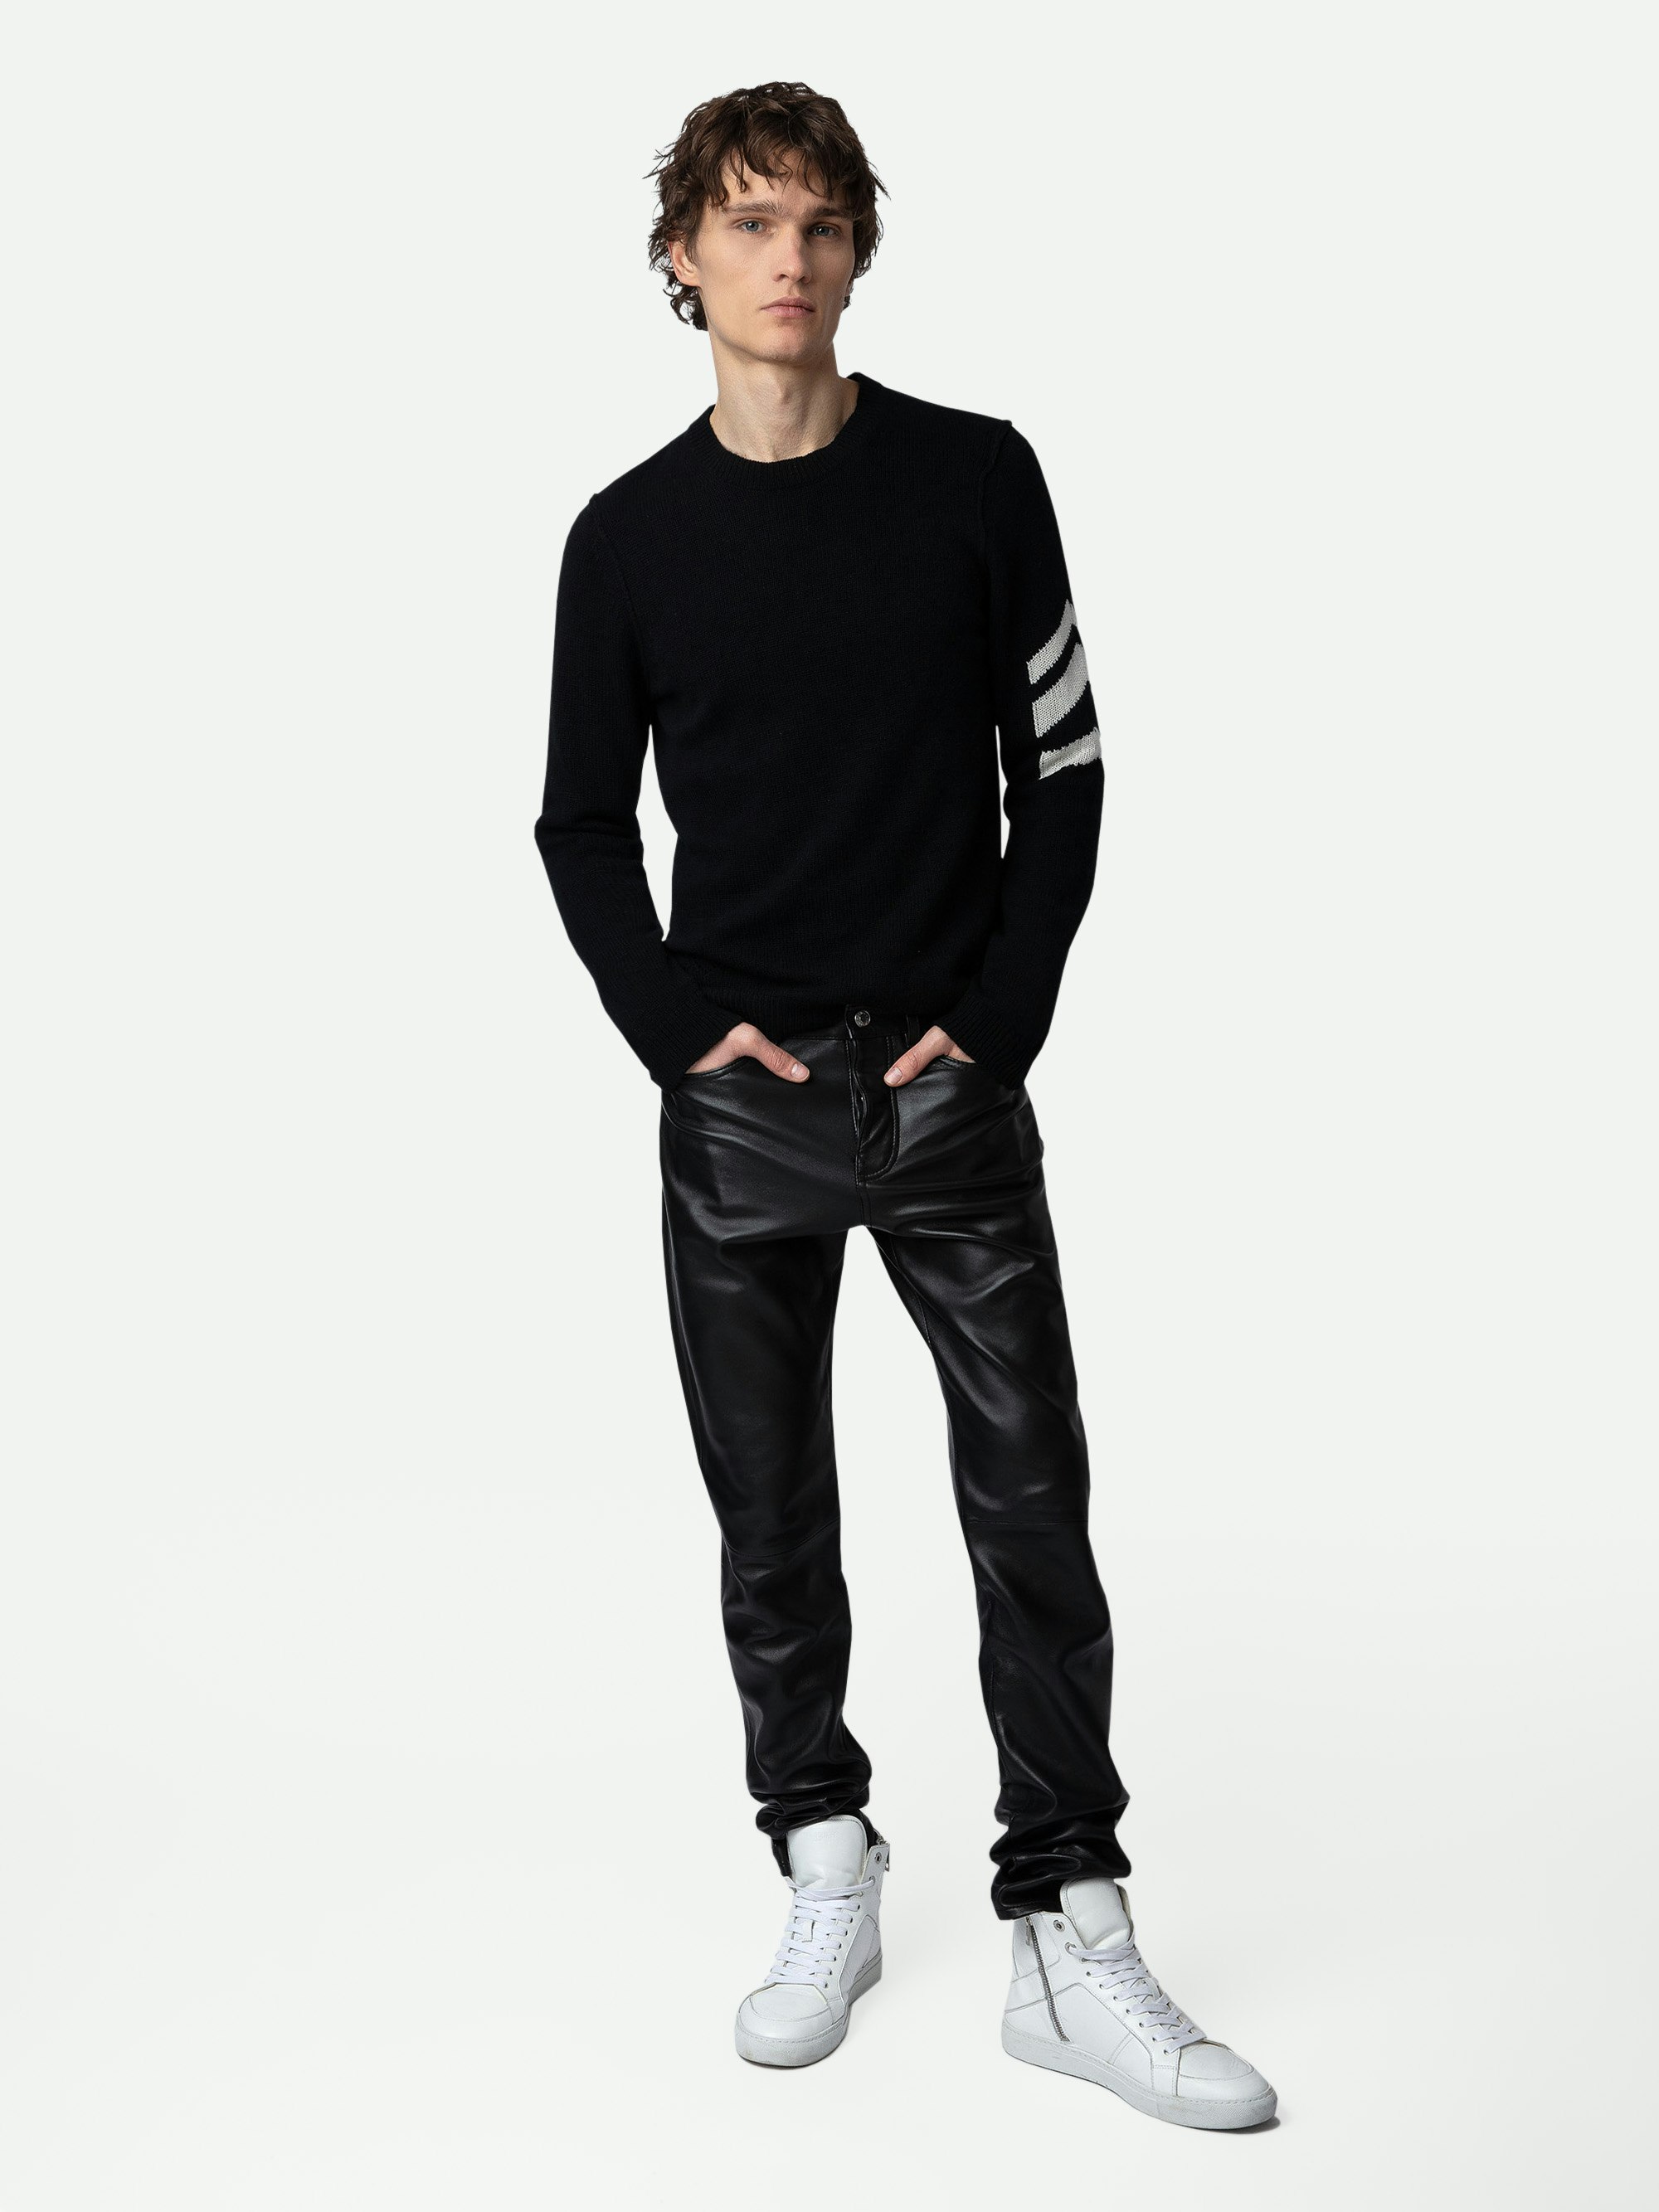 Kennedy Arrow 100% Cashmere Jumper - Men’s black 100% cashmere jumper with arrow motifs